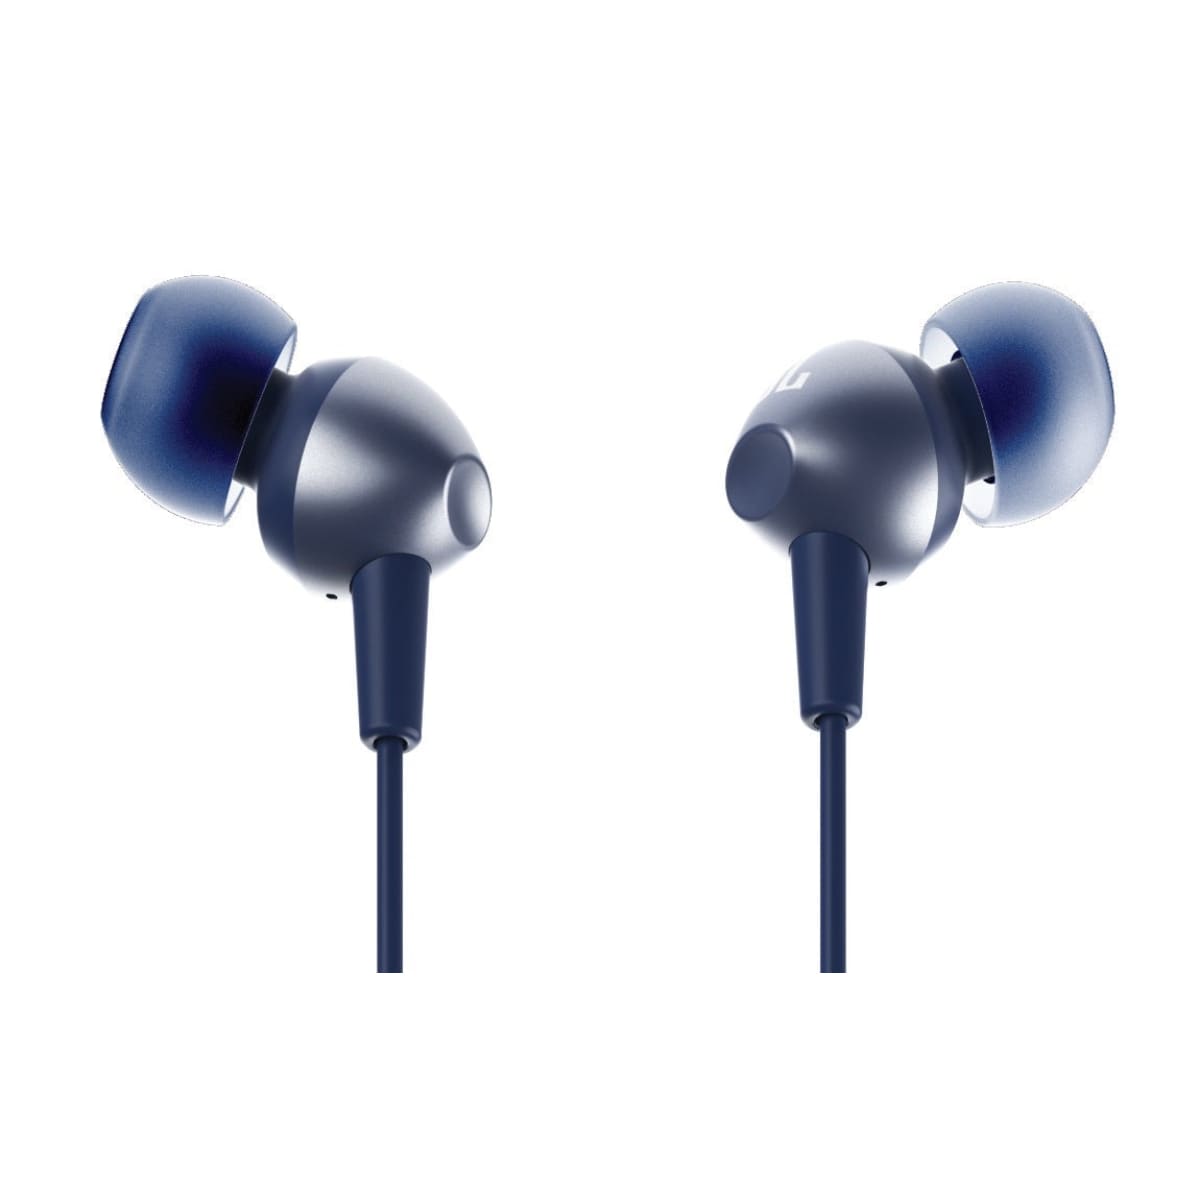 JBL C200SI In-Ear Headphones with Built-in Microphone - Blue